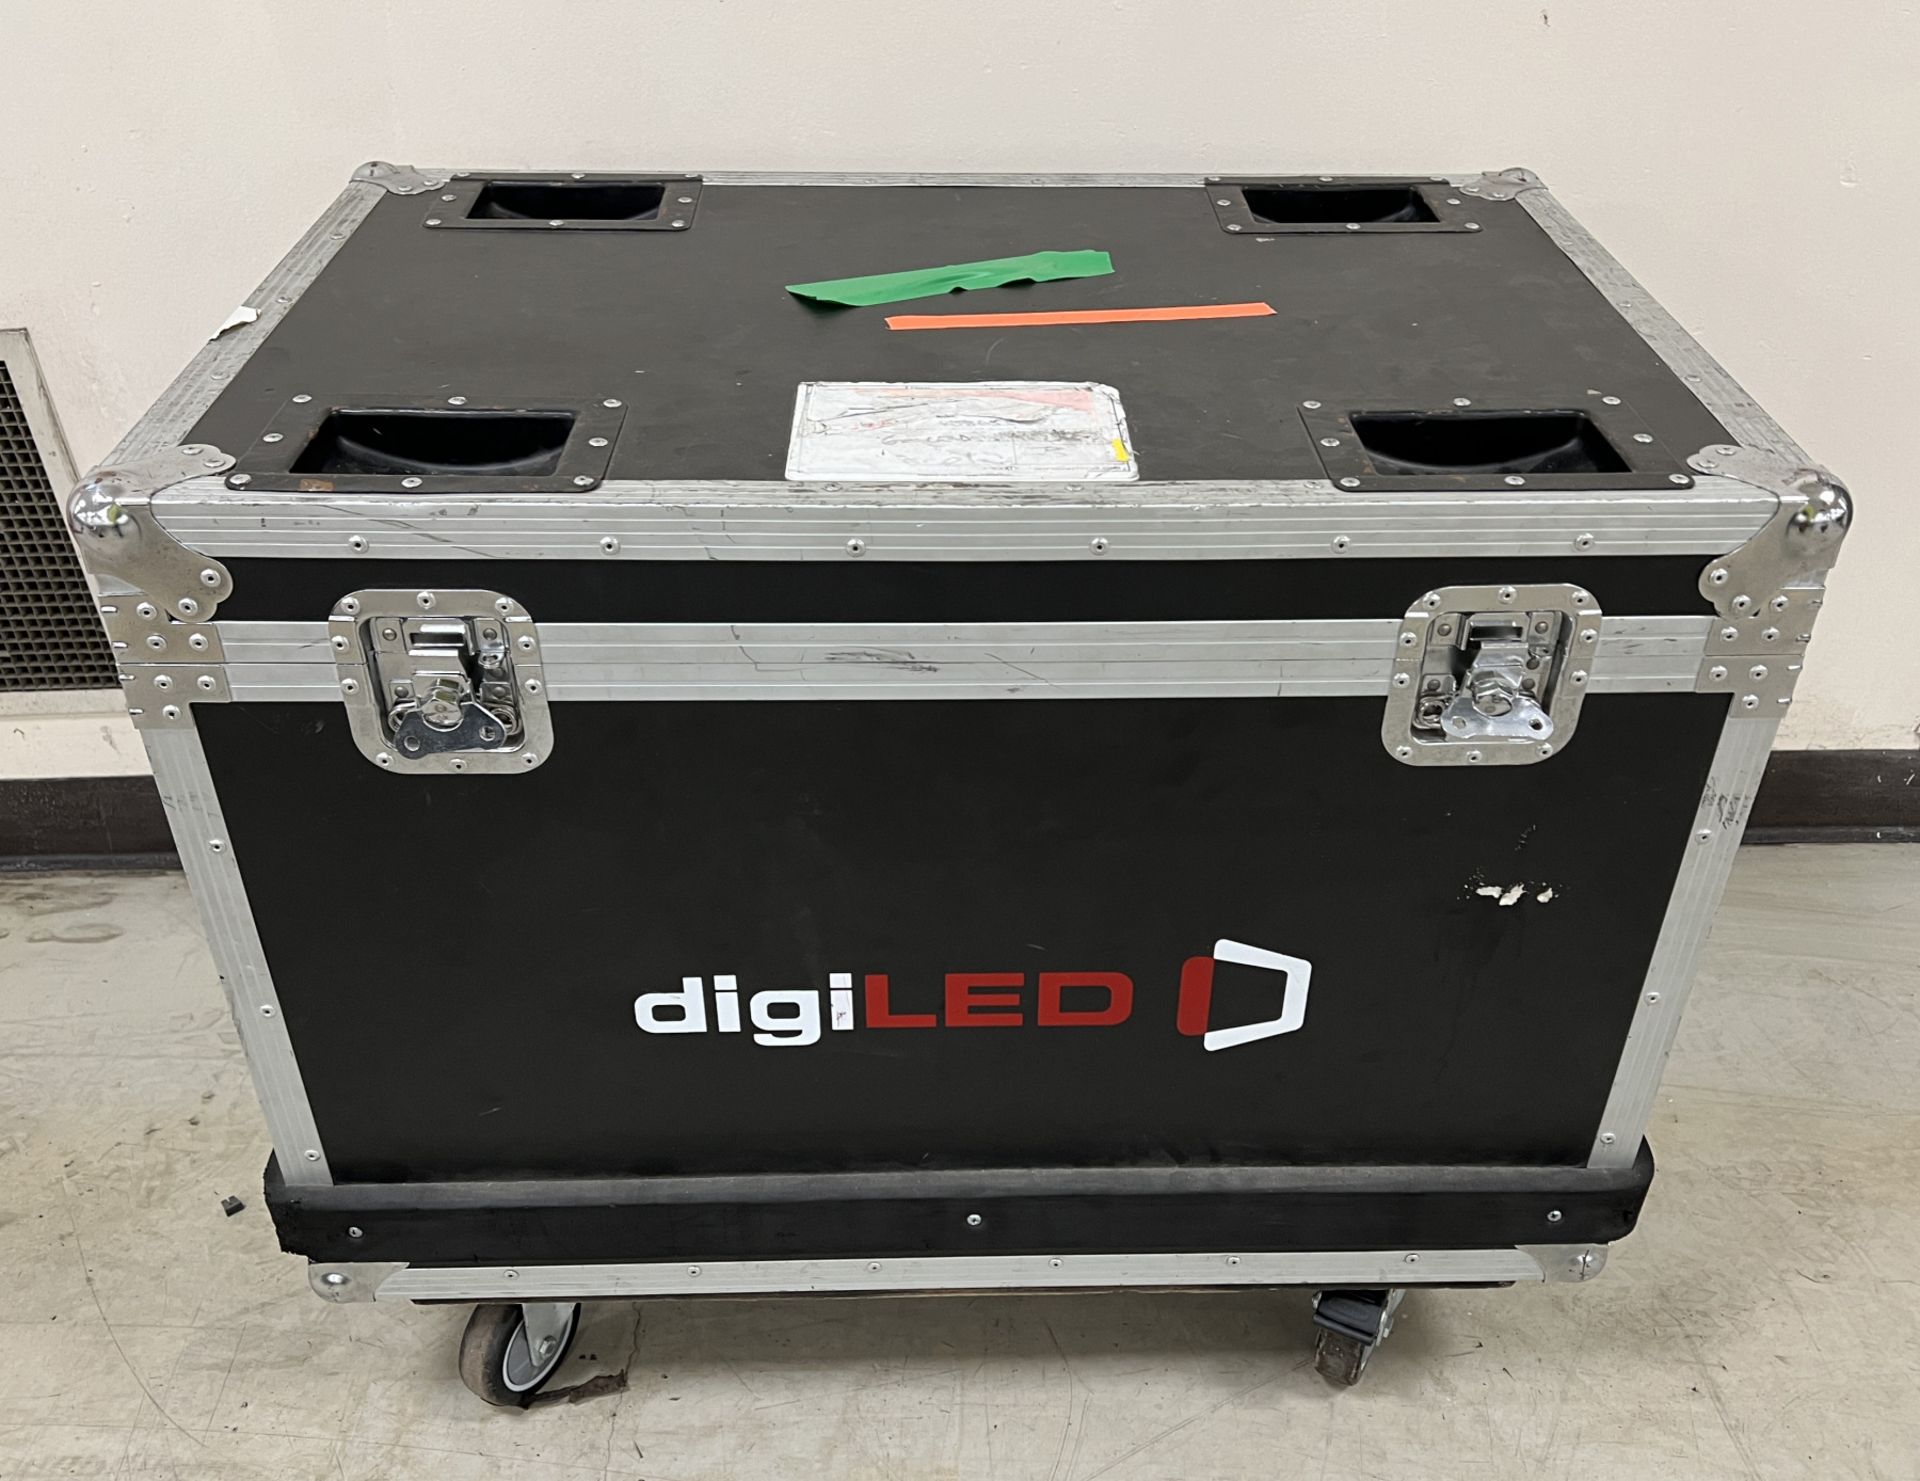 Digi LED HRI3900 kit - 120 LED tiles housed in 20 wheeled flight cases - see description for details - Image 96 of 196